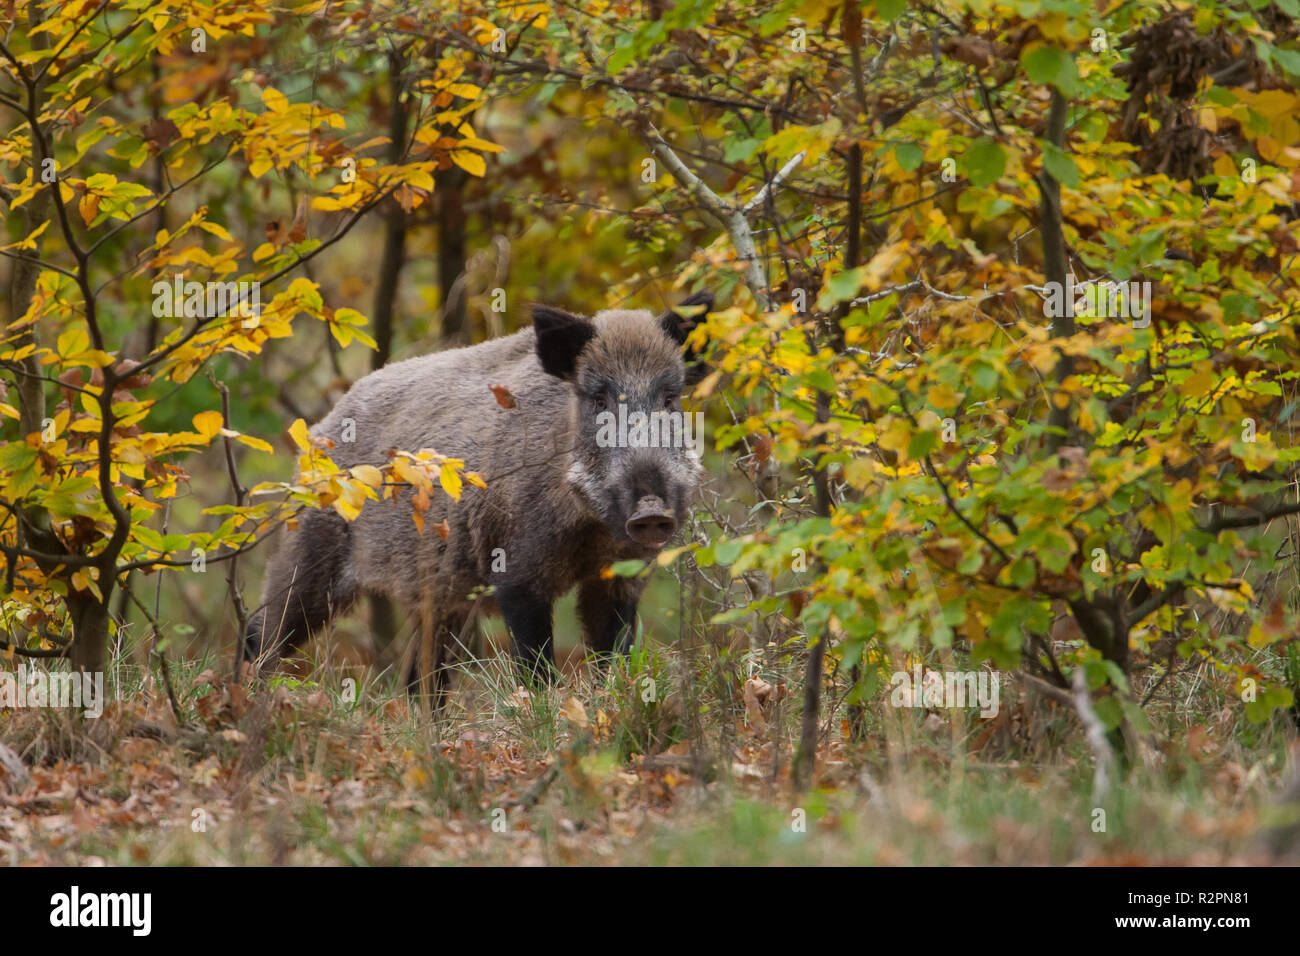 Wild boar in autumn leaves Stock Photo